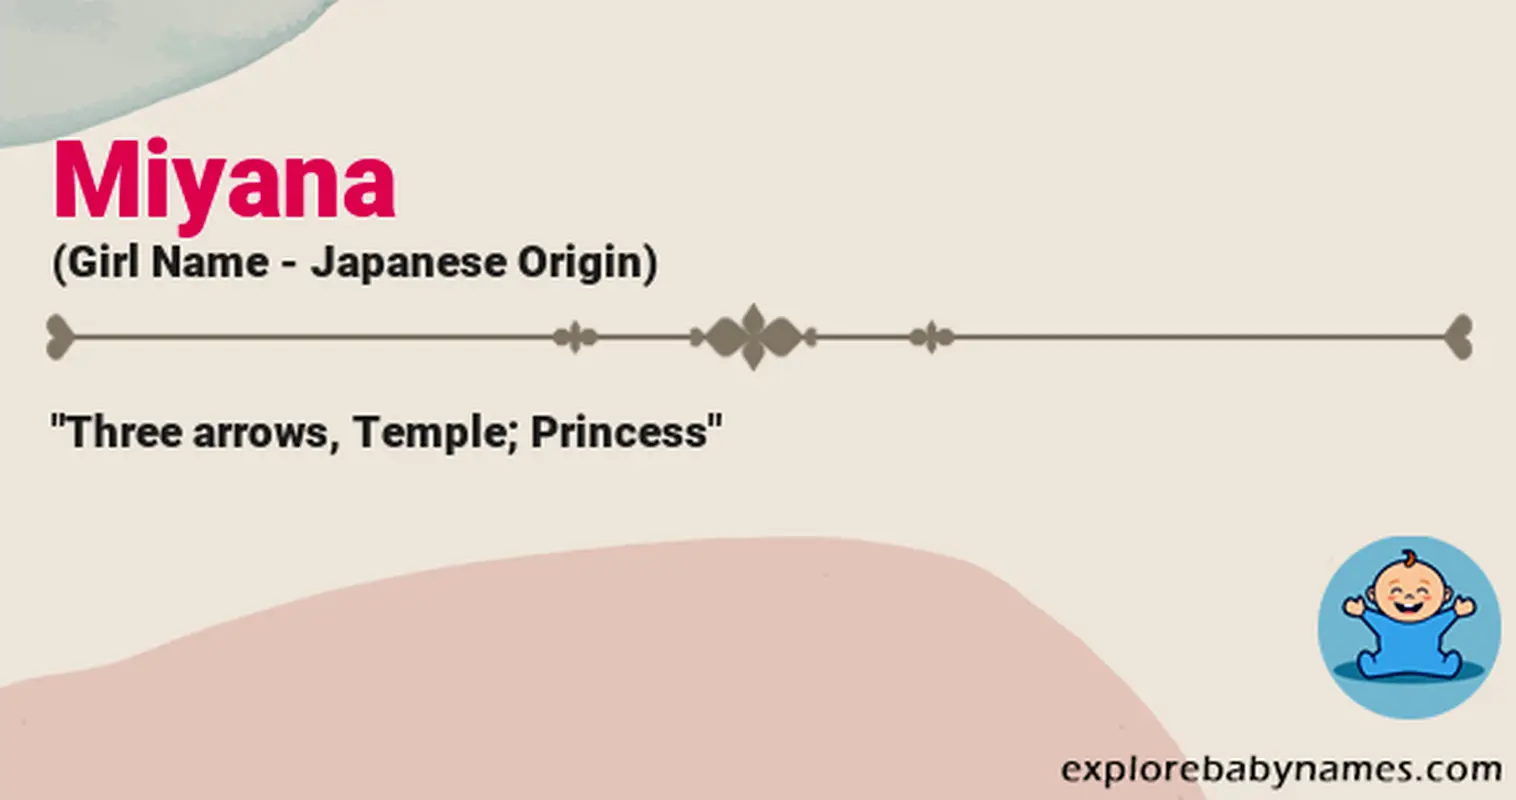 Meaning of Miyana